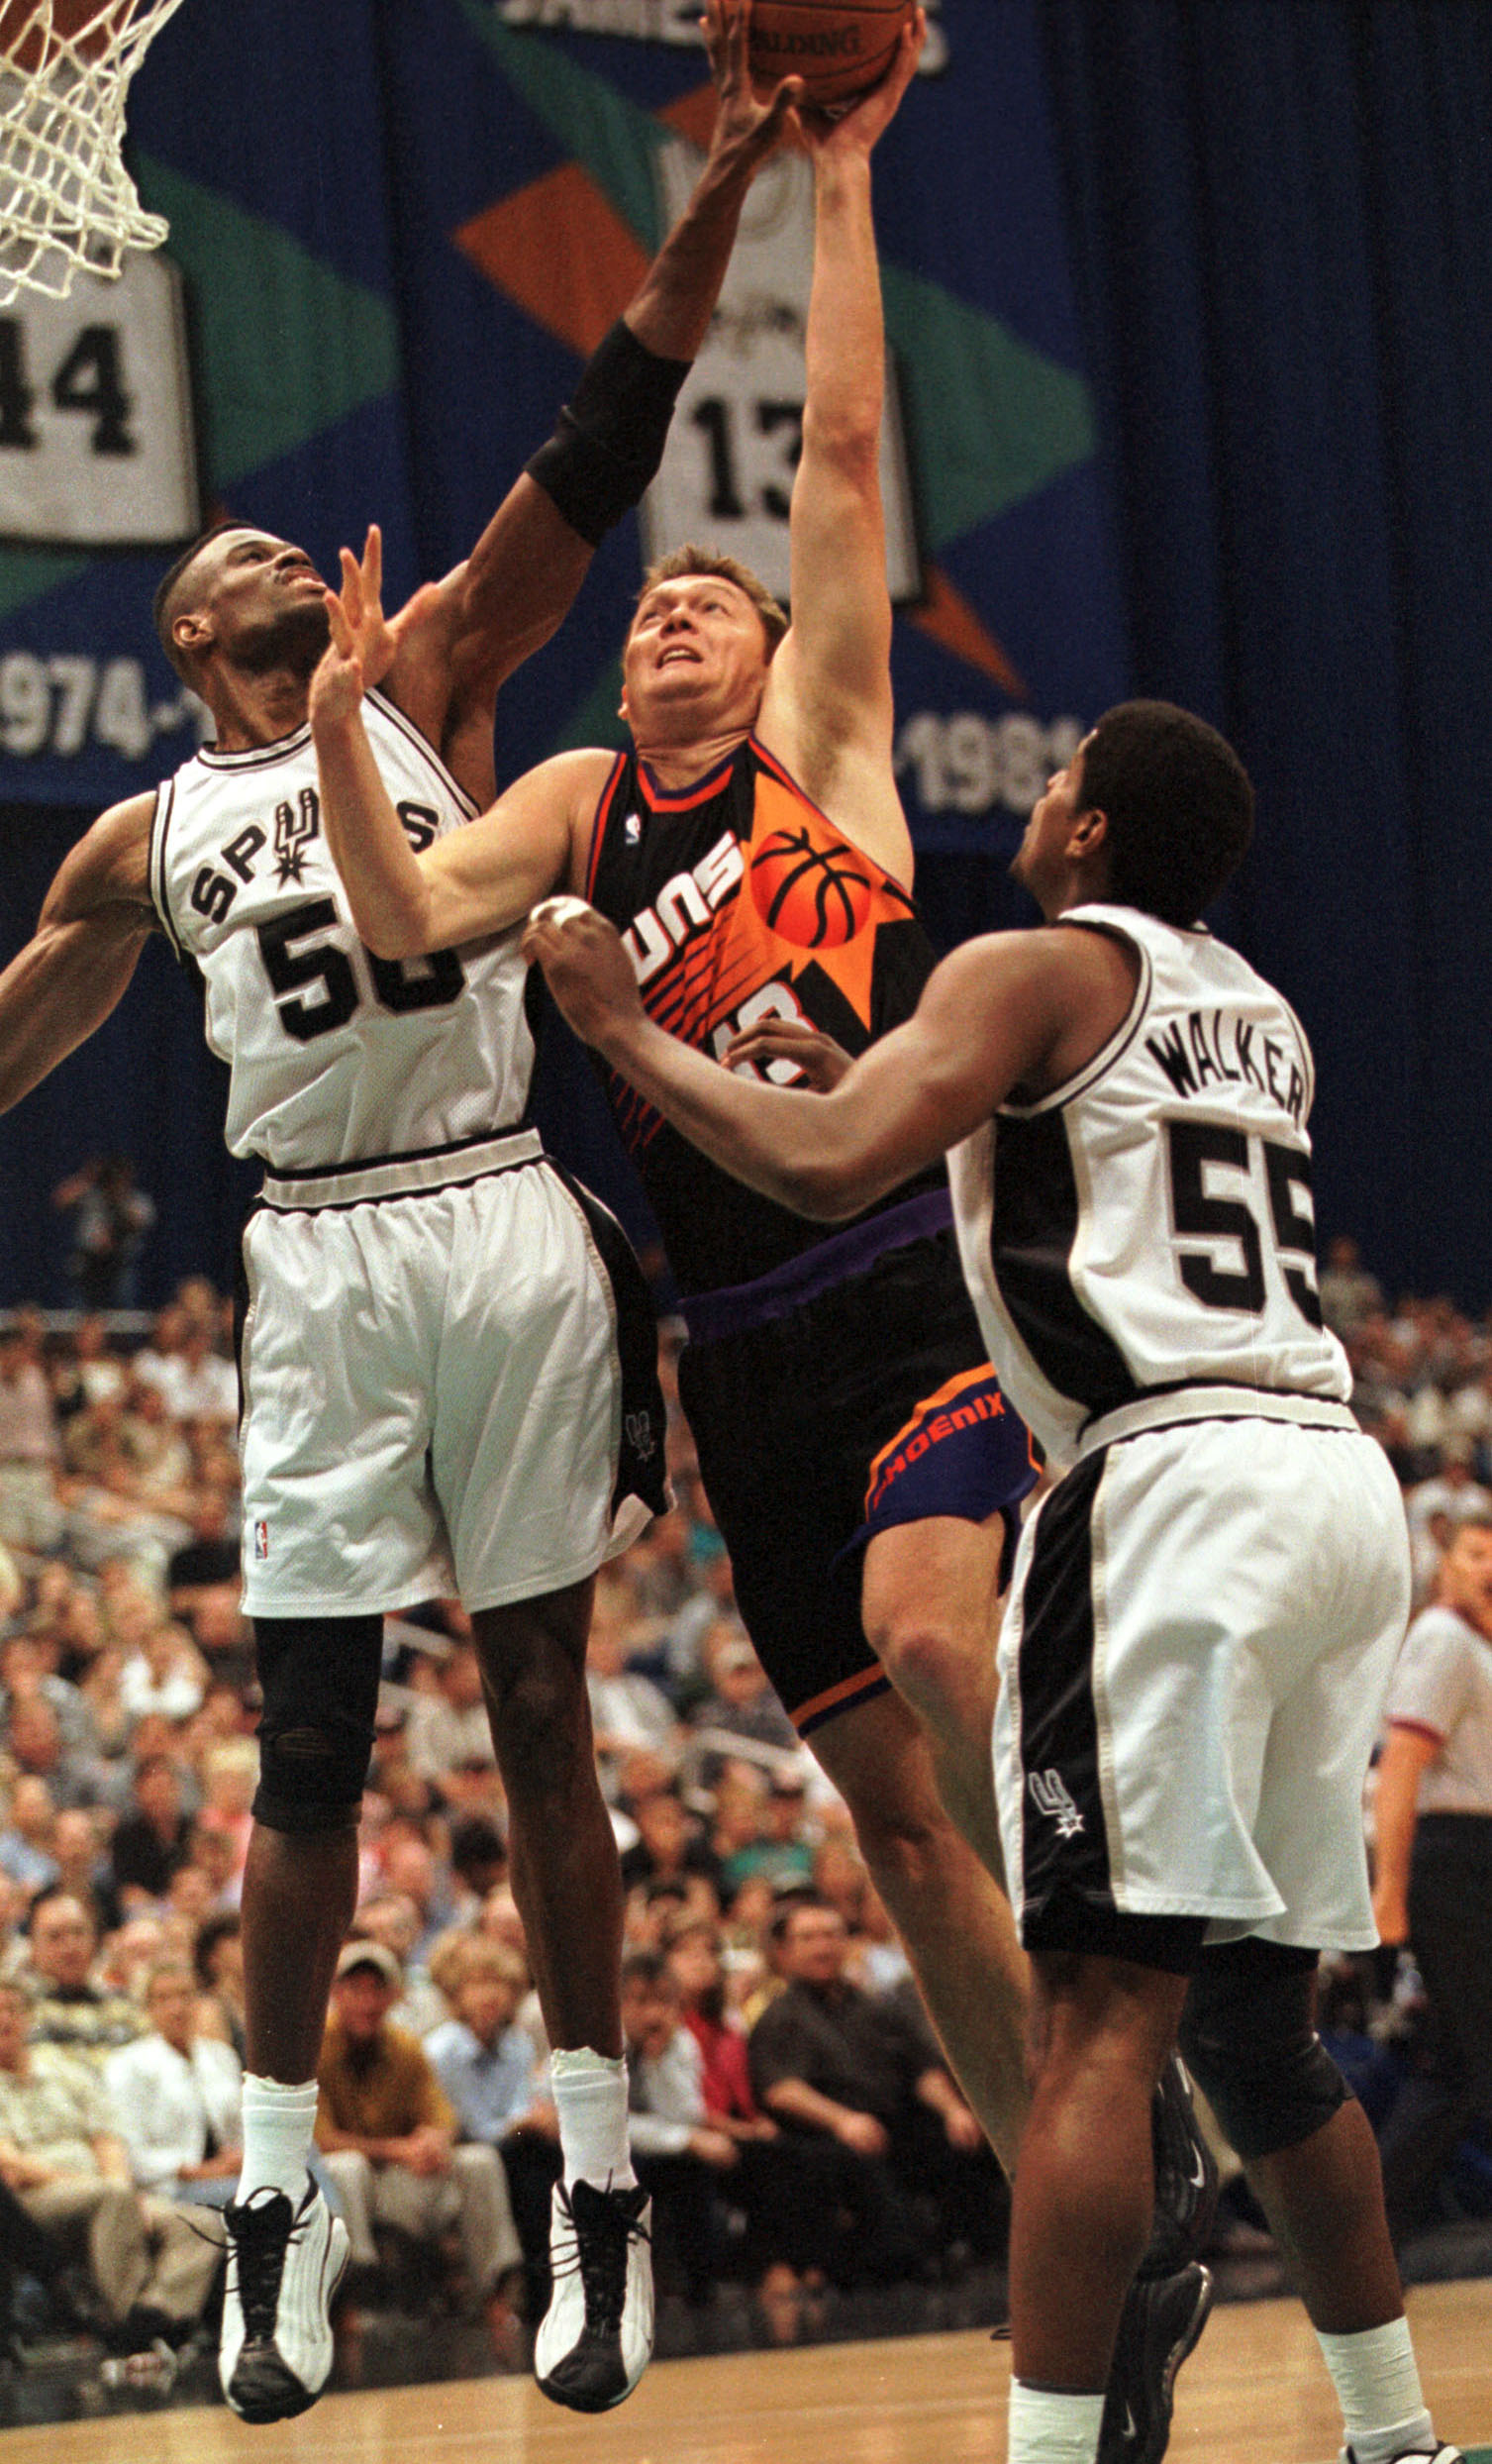 LegacyVintage99 Vintage San Antonio Spurs David Robinson #50 Jersey Champion Size Large L NBA Basketball Texas 1990s 90s Tim Duncan